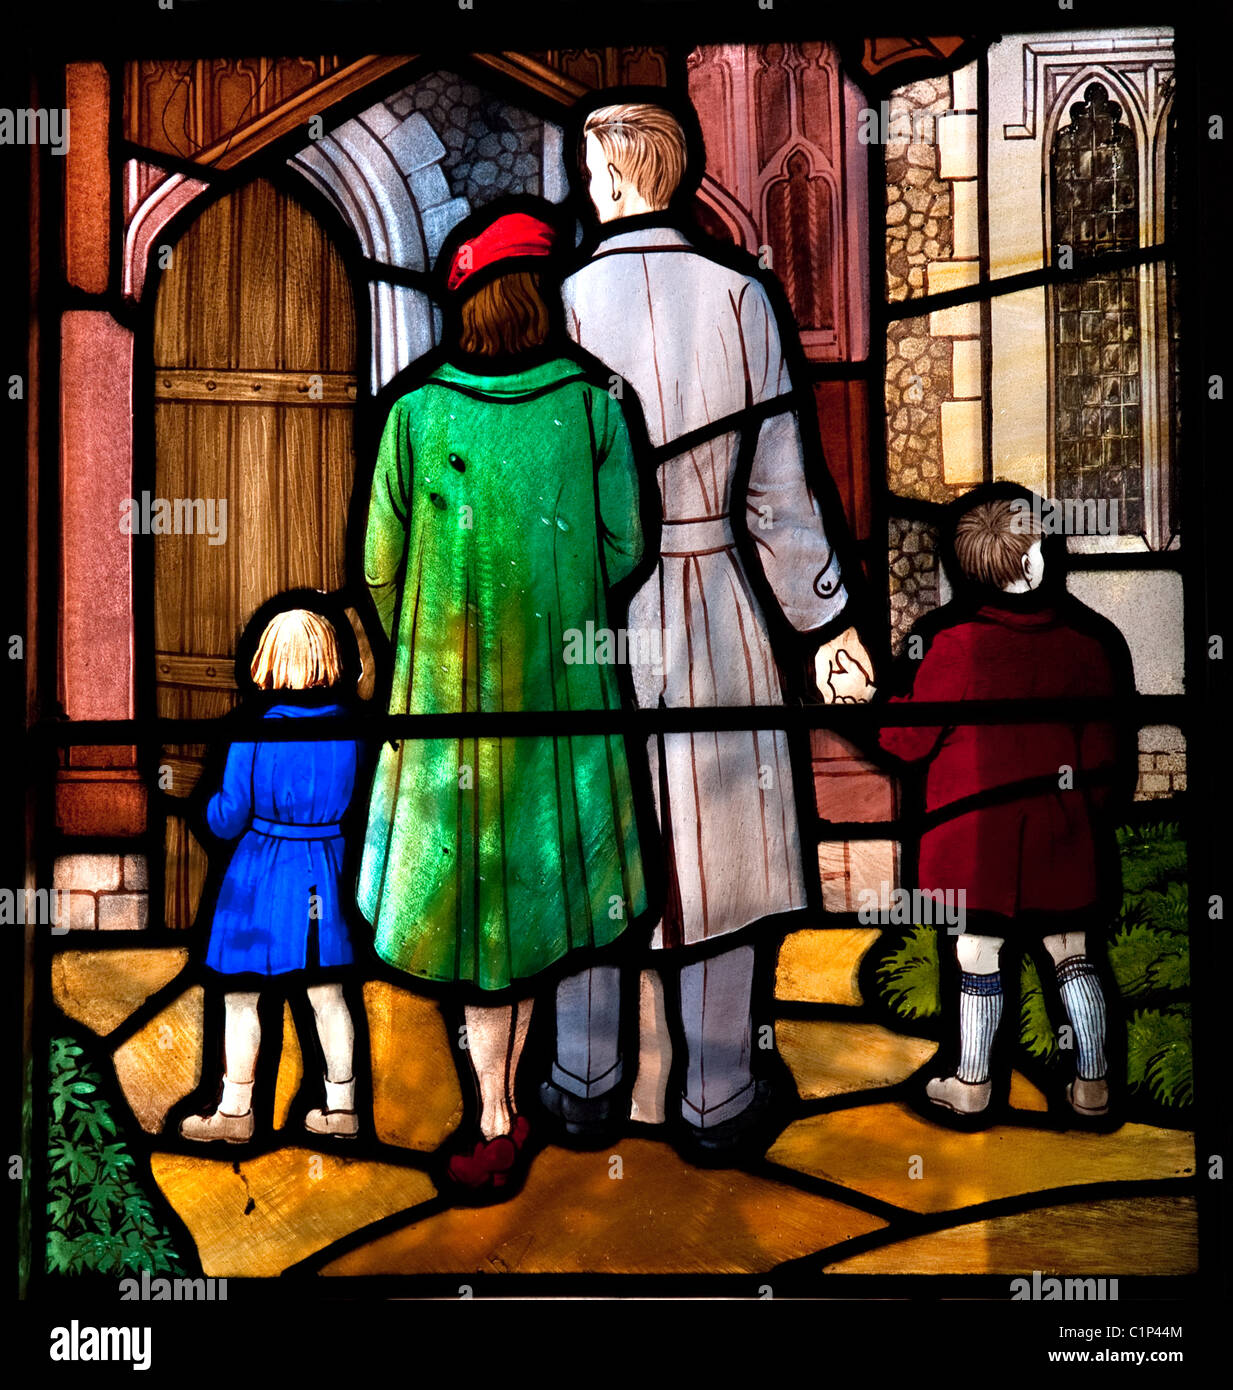 Familia yendo a la iglesia fotografías e imágenes de alta resolución - Alamy